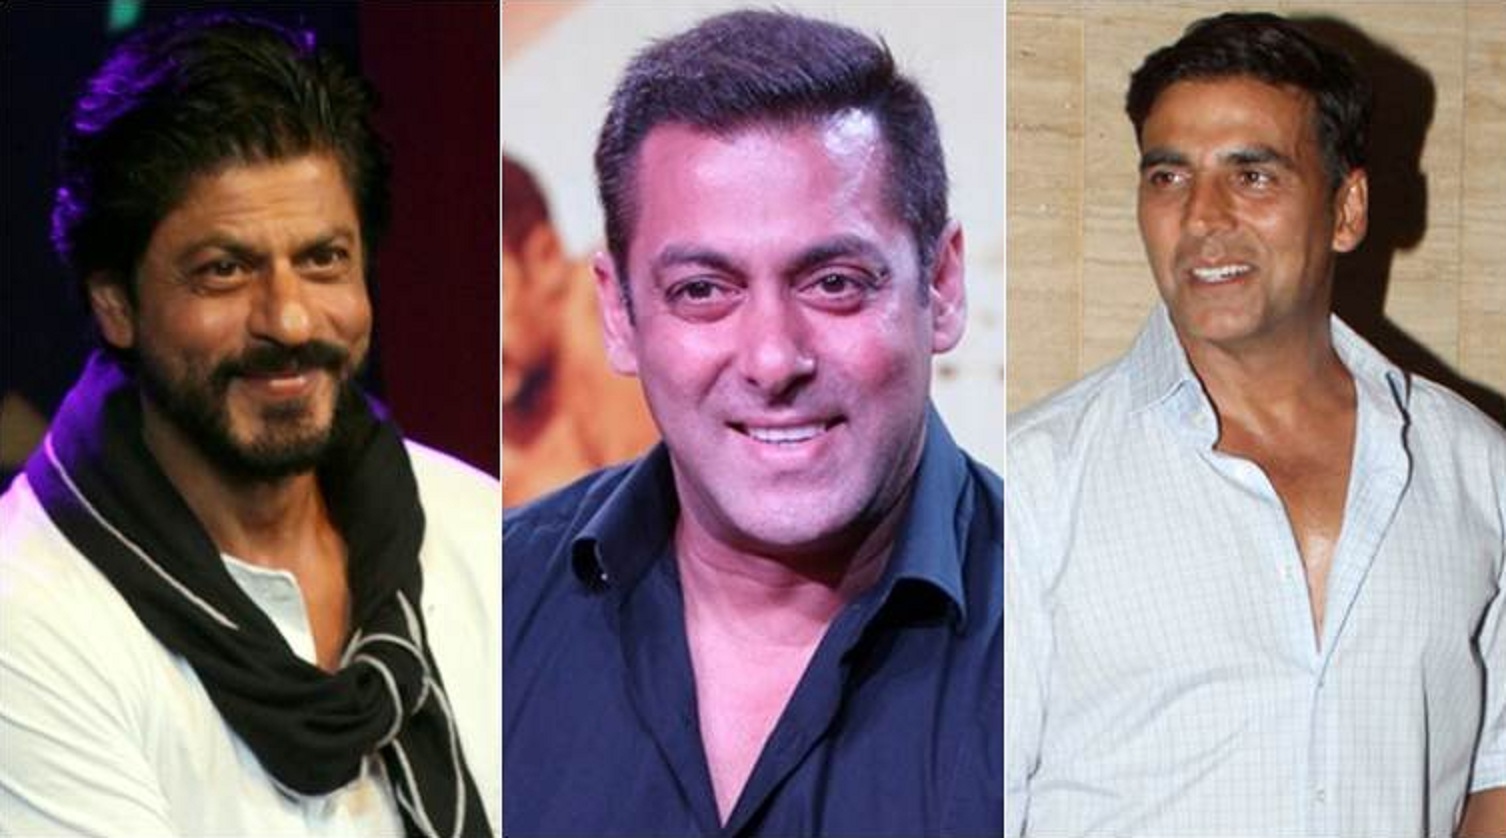 Salman Khan and Akshay Kumar among Forbes Highest-Paid actors, but where’s SRK?